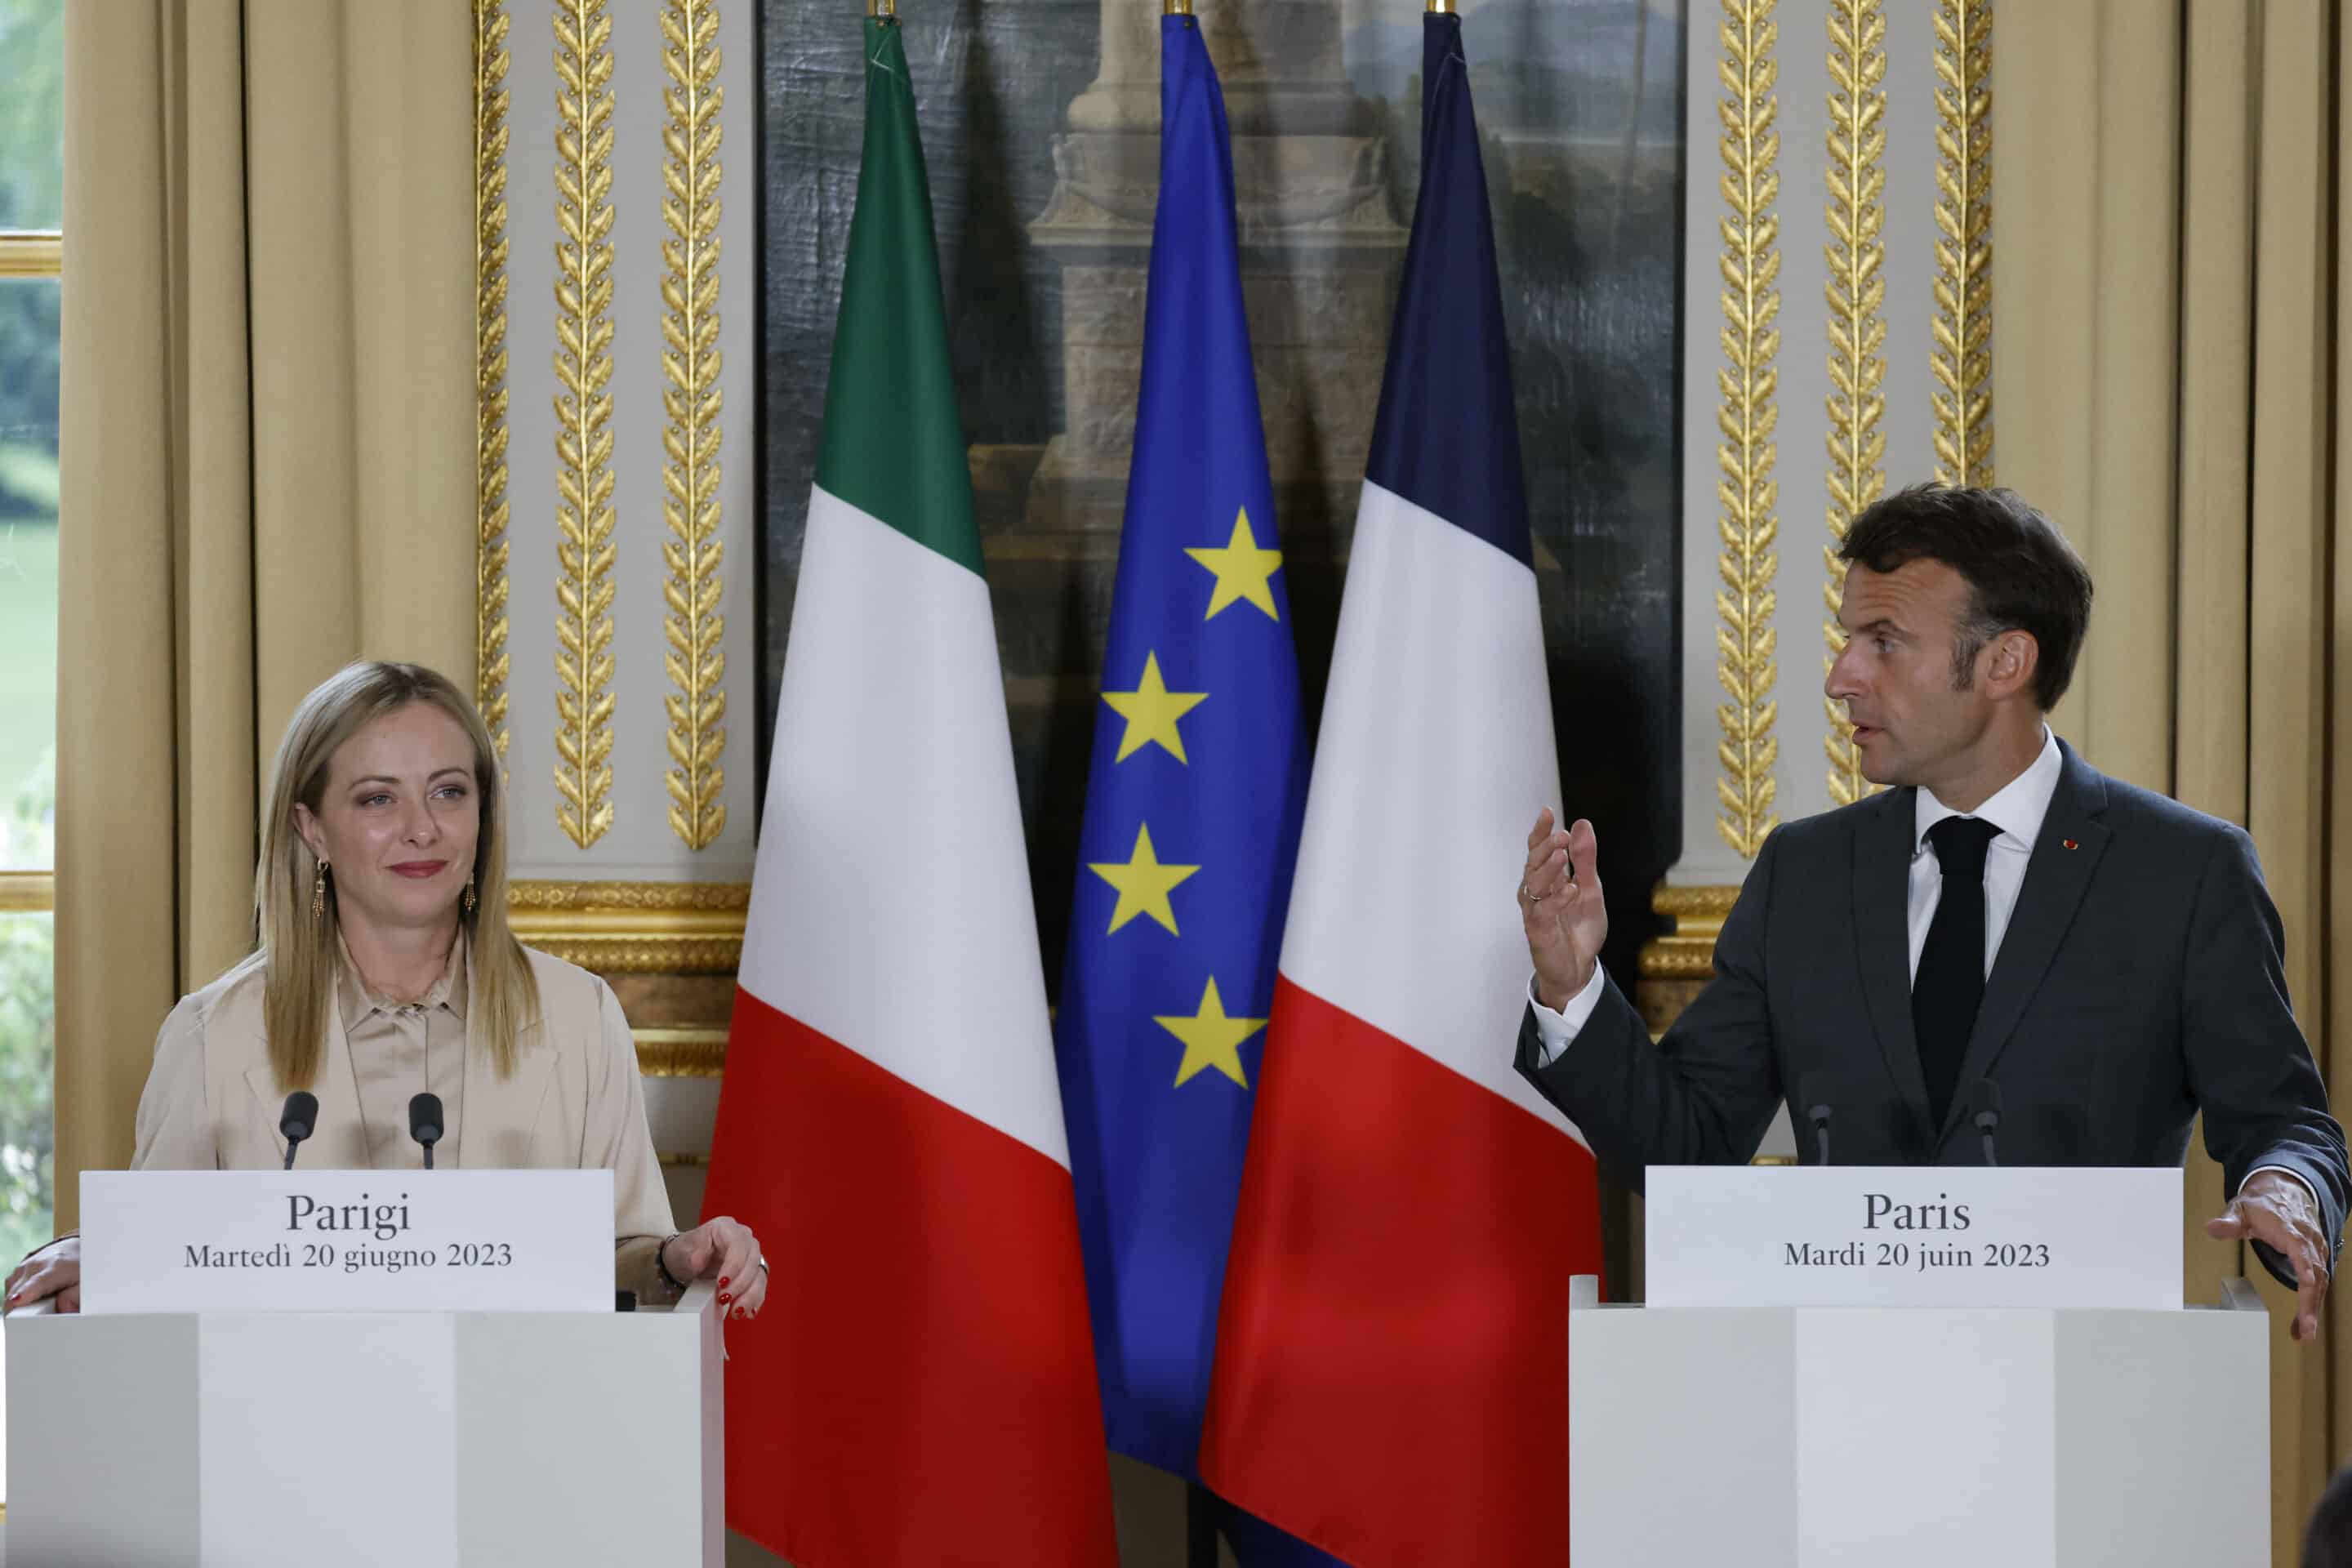 Giorgia Meloni et Emmanuel Macron June 20, 2023. (Ludovic Marin, Pool via AP)/PAR142/23171606059916/POOL PHOTO/2306201855